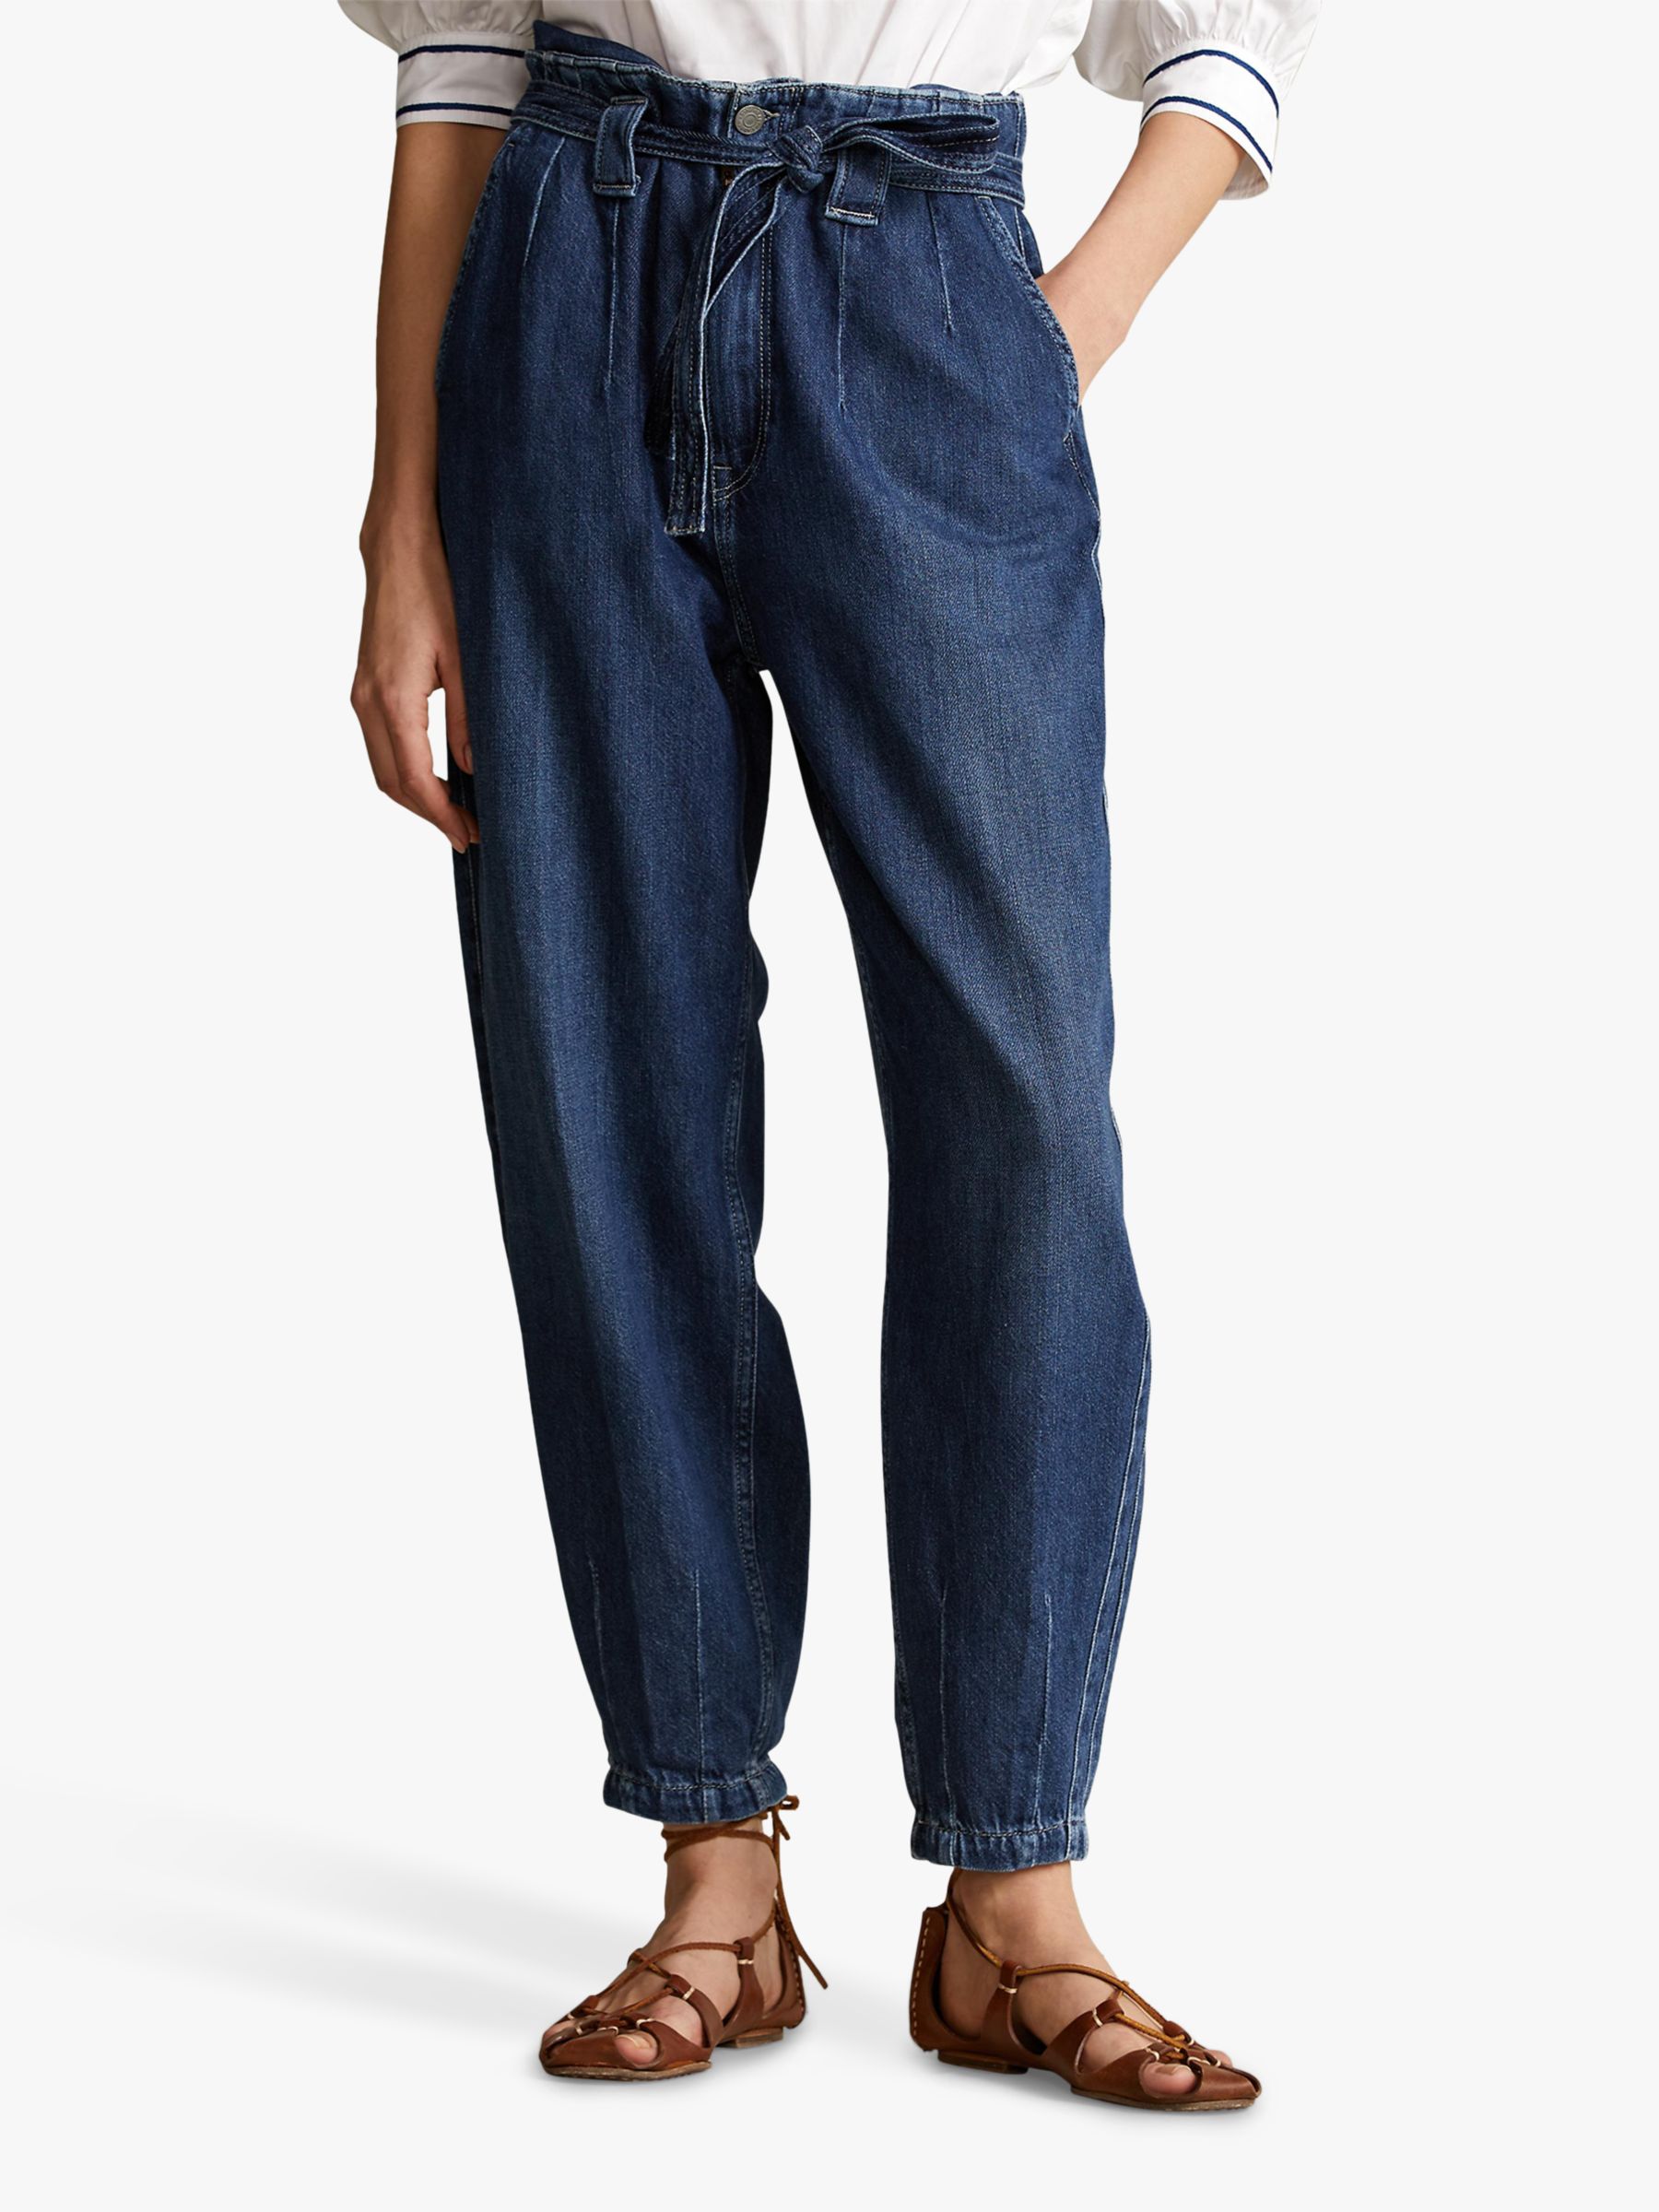 Polo Ralph Lauren Belted Tapered Jeans, Medium Indigo